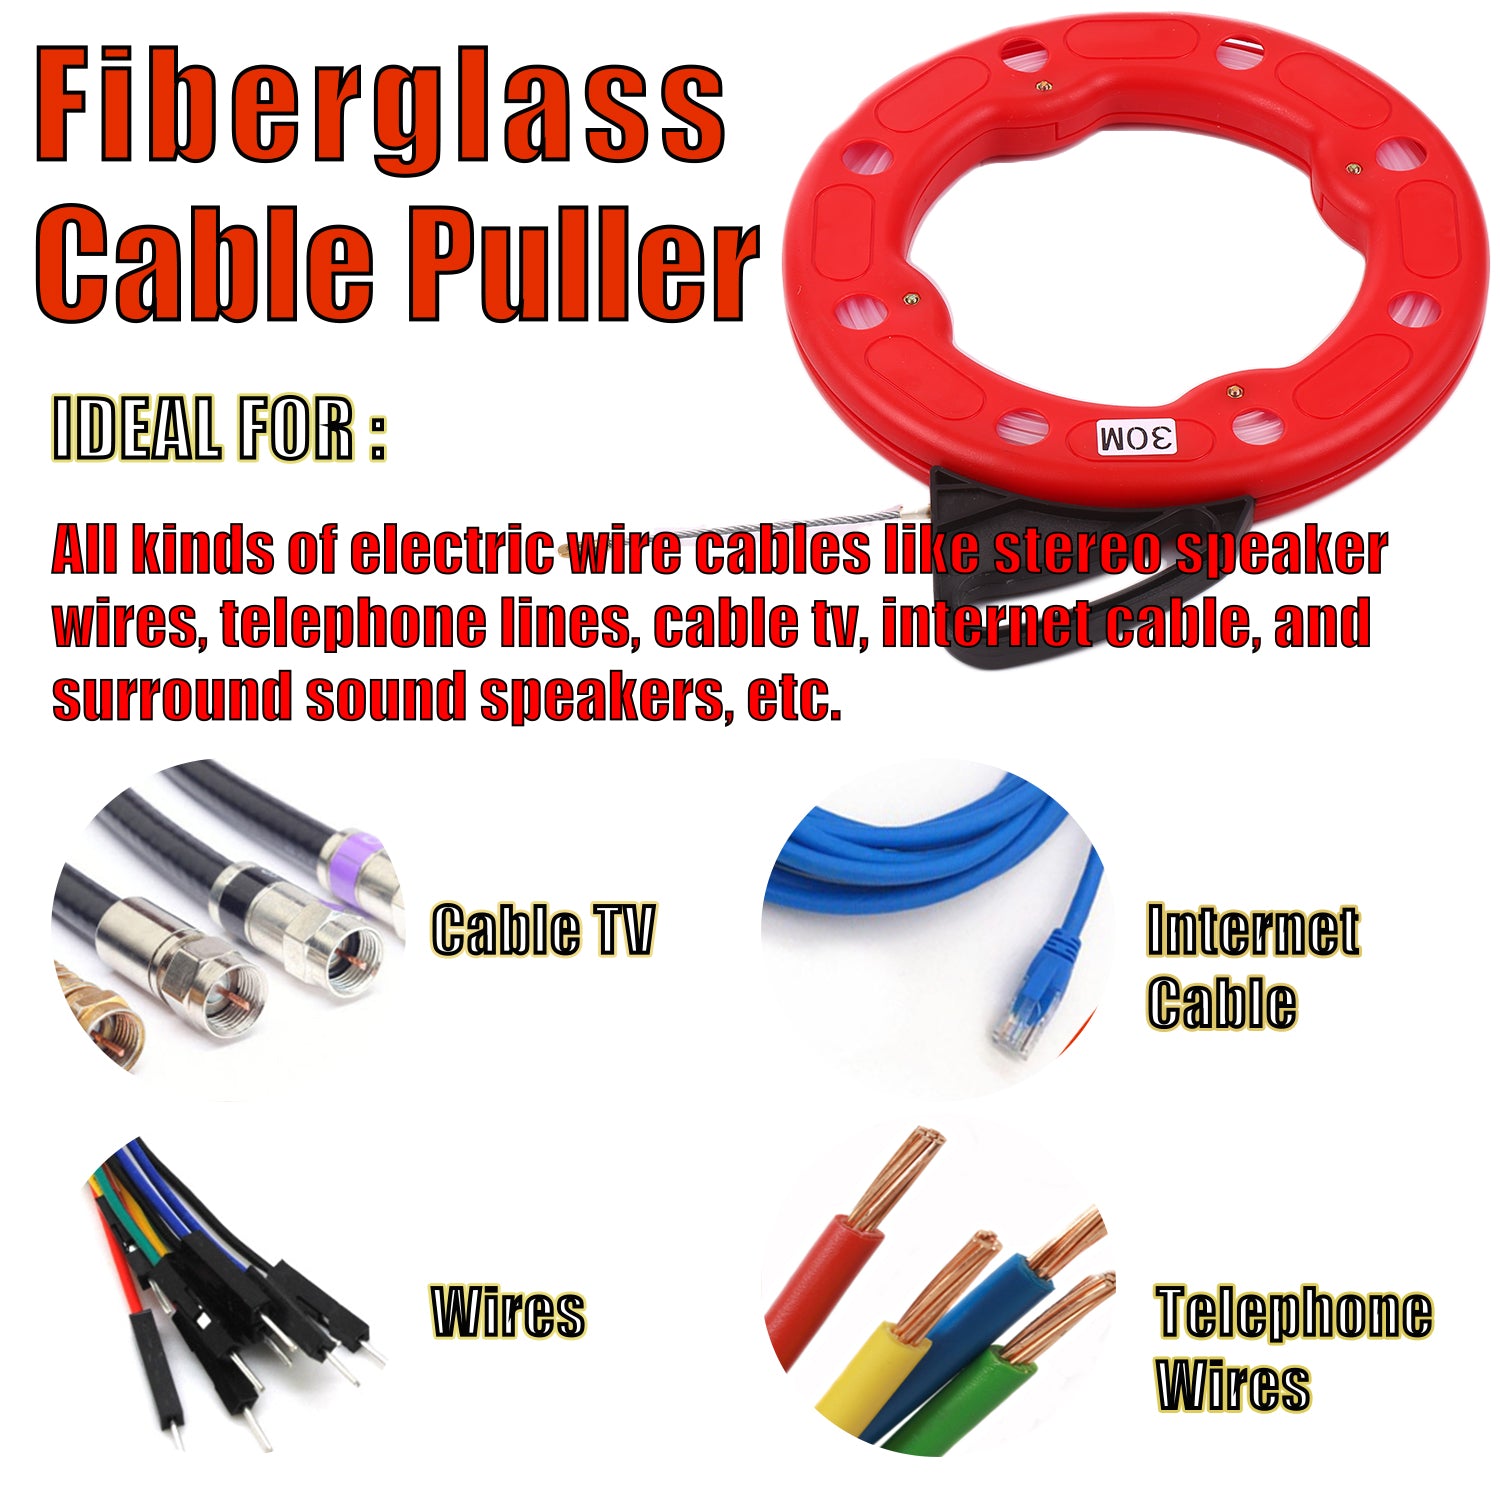 30M Fiberglass Fish Tape Reel Puller Conductive Electrical - 30M